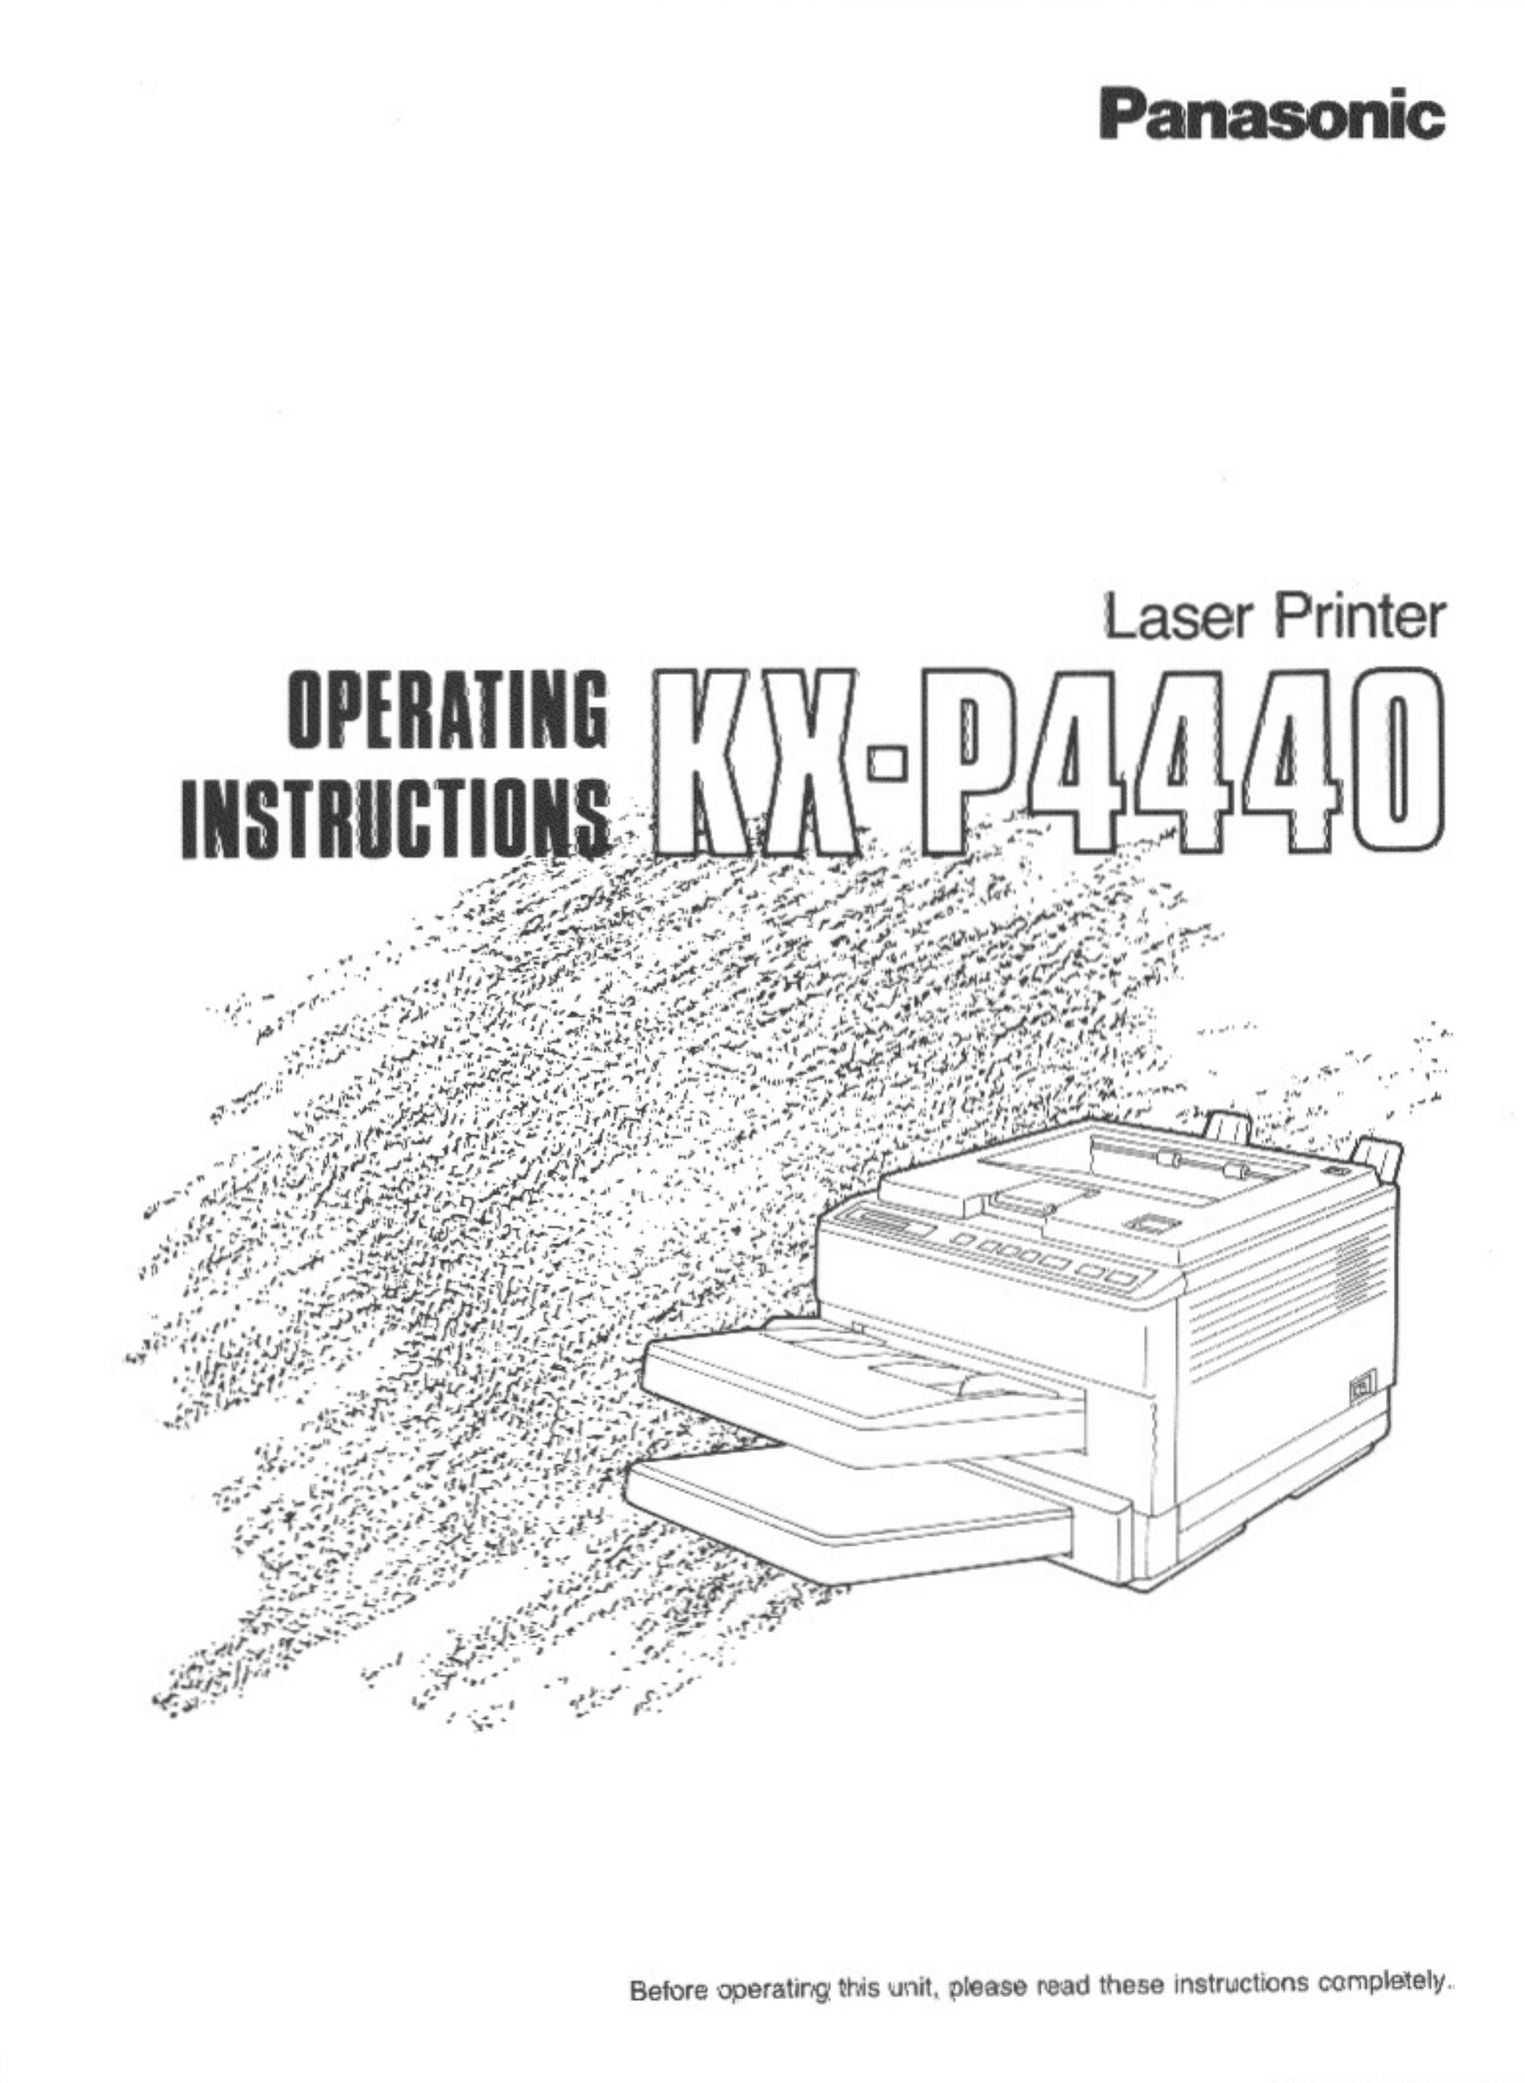 Panasonic KX-P4440 Printer User Manual